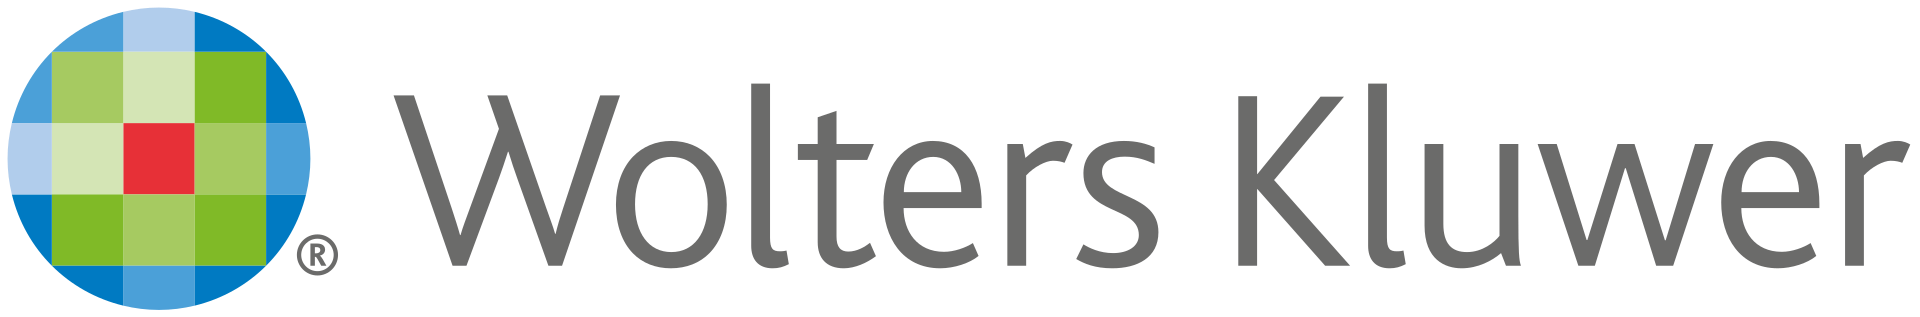 Wolters Kluwer  Brand Logo